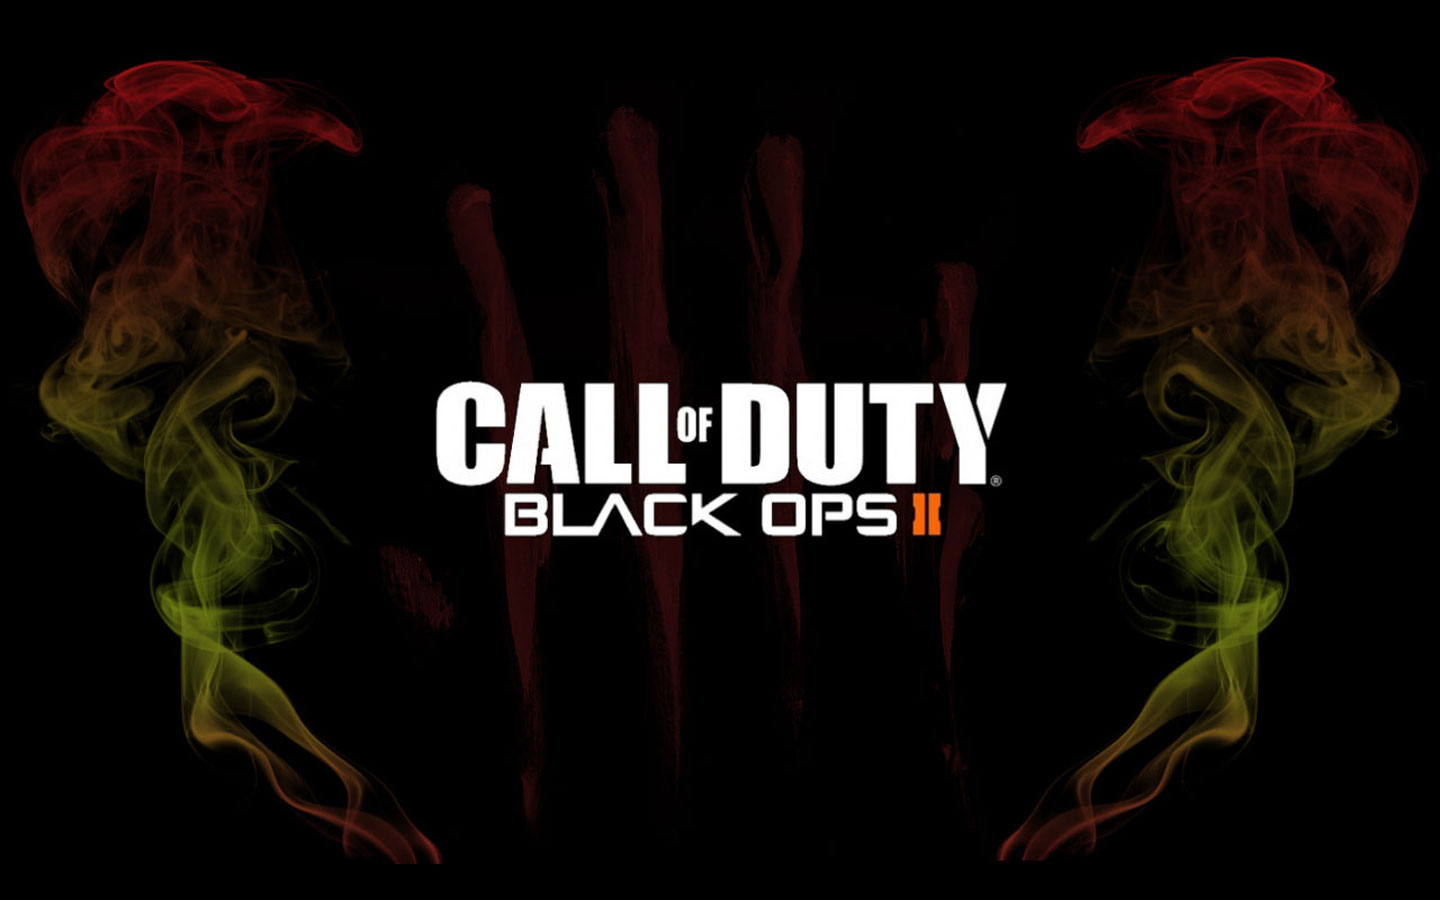 All About Call Of Duty Black Ops Wallpaper Descargar Kidskunstinfo